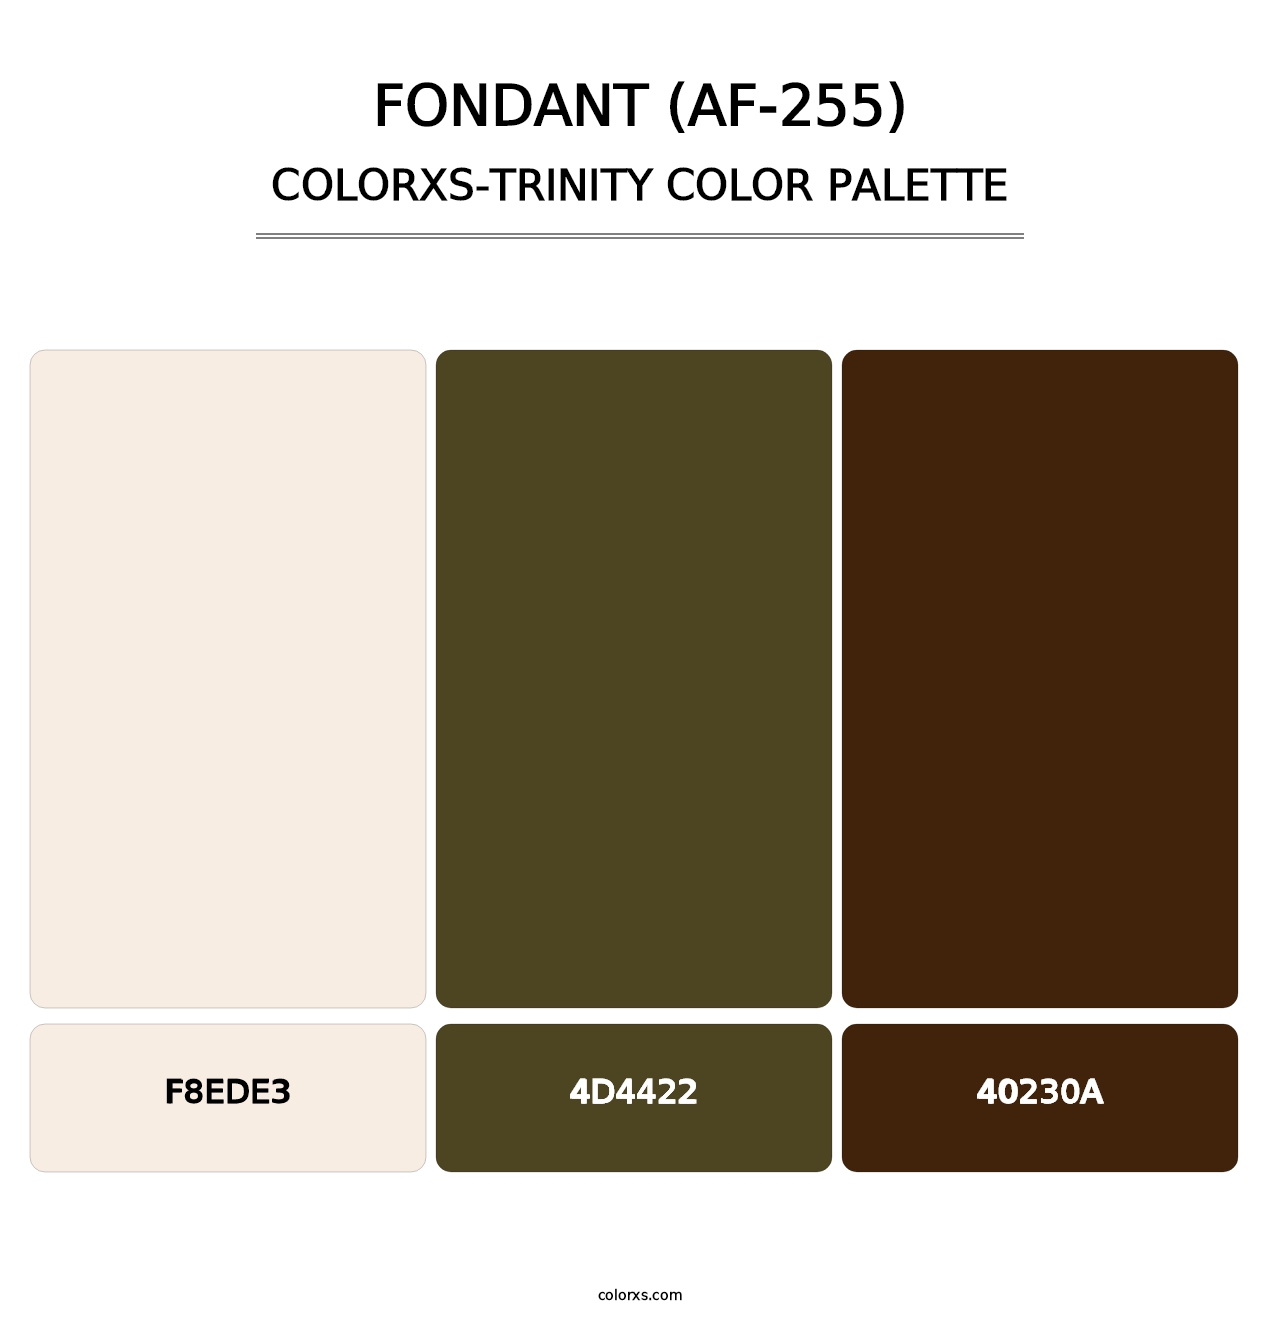 Fondant (AF-255) - Colorxs Trinity Palette